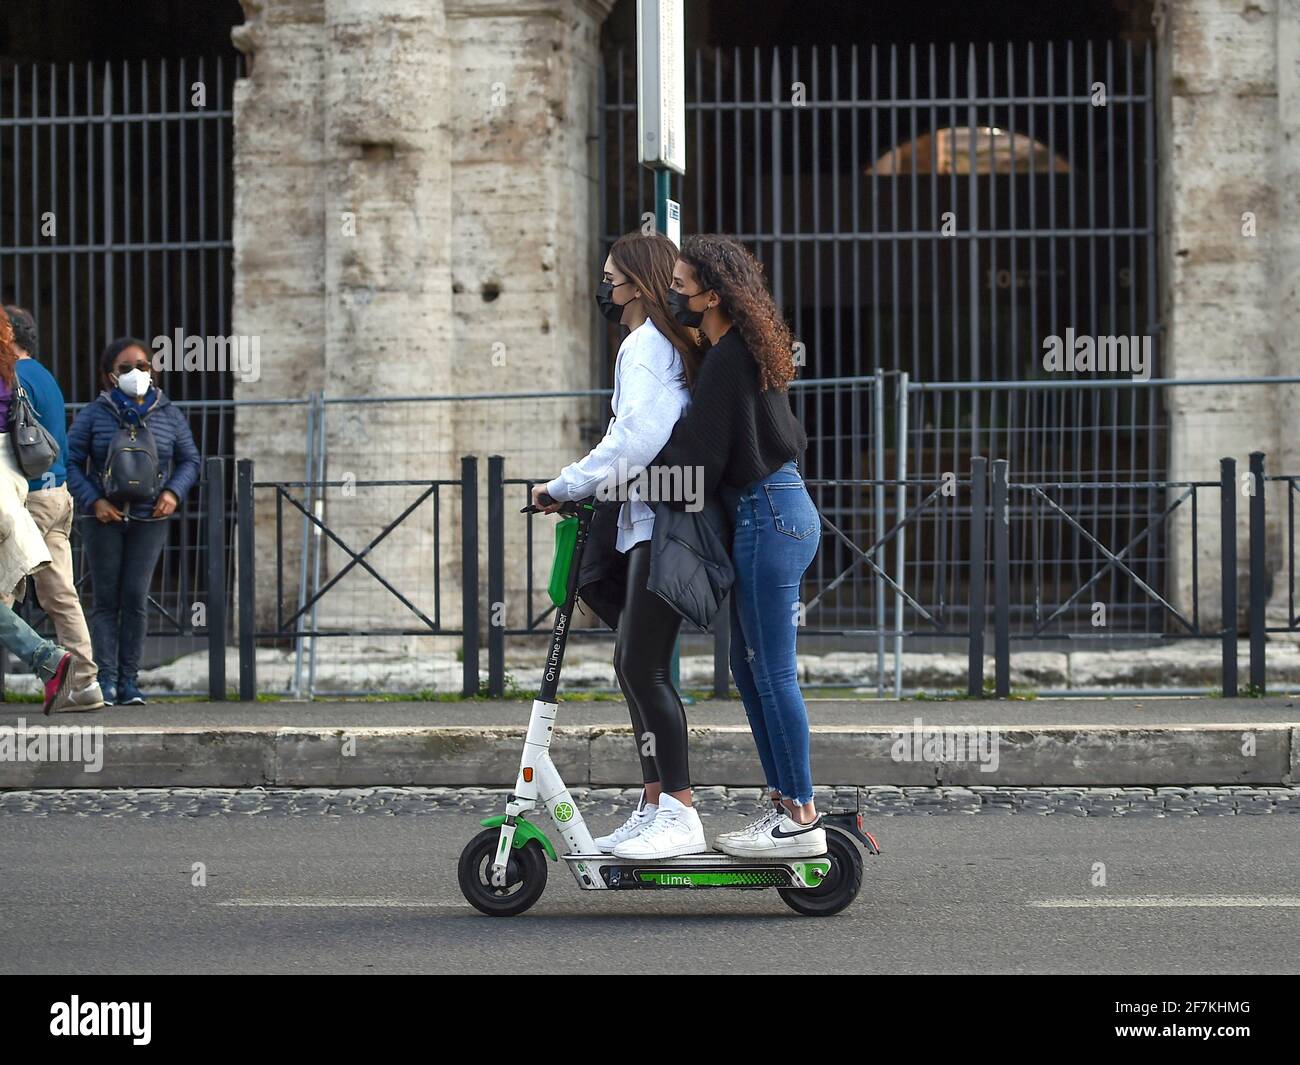 Italy, Rome, 13, 2021 : people riding an electric scooter near the Coliseum area Photo © Fabio Mazzarella/Sintesi/Alamy Stock Photo Stock Photo -